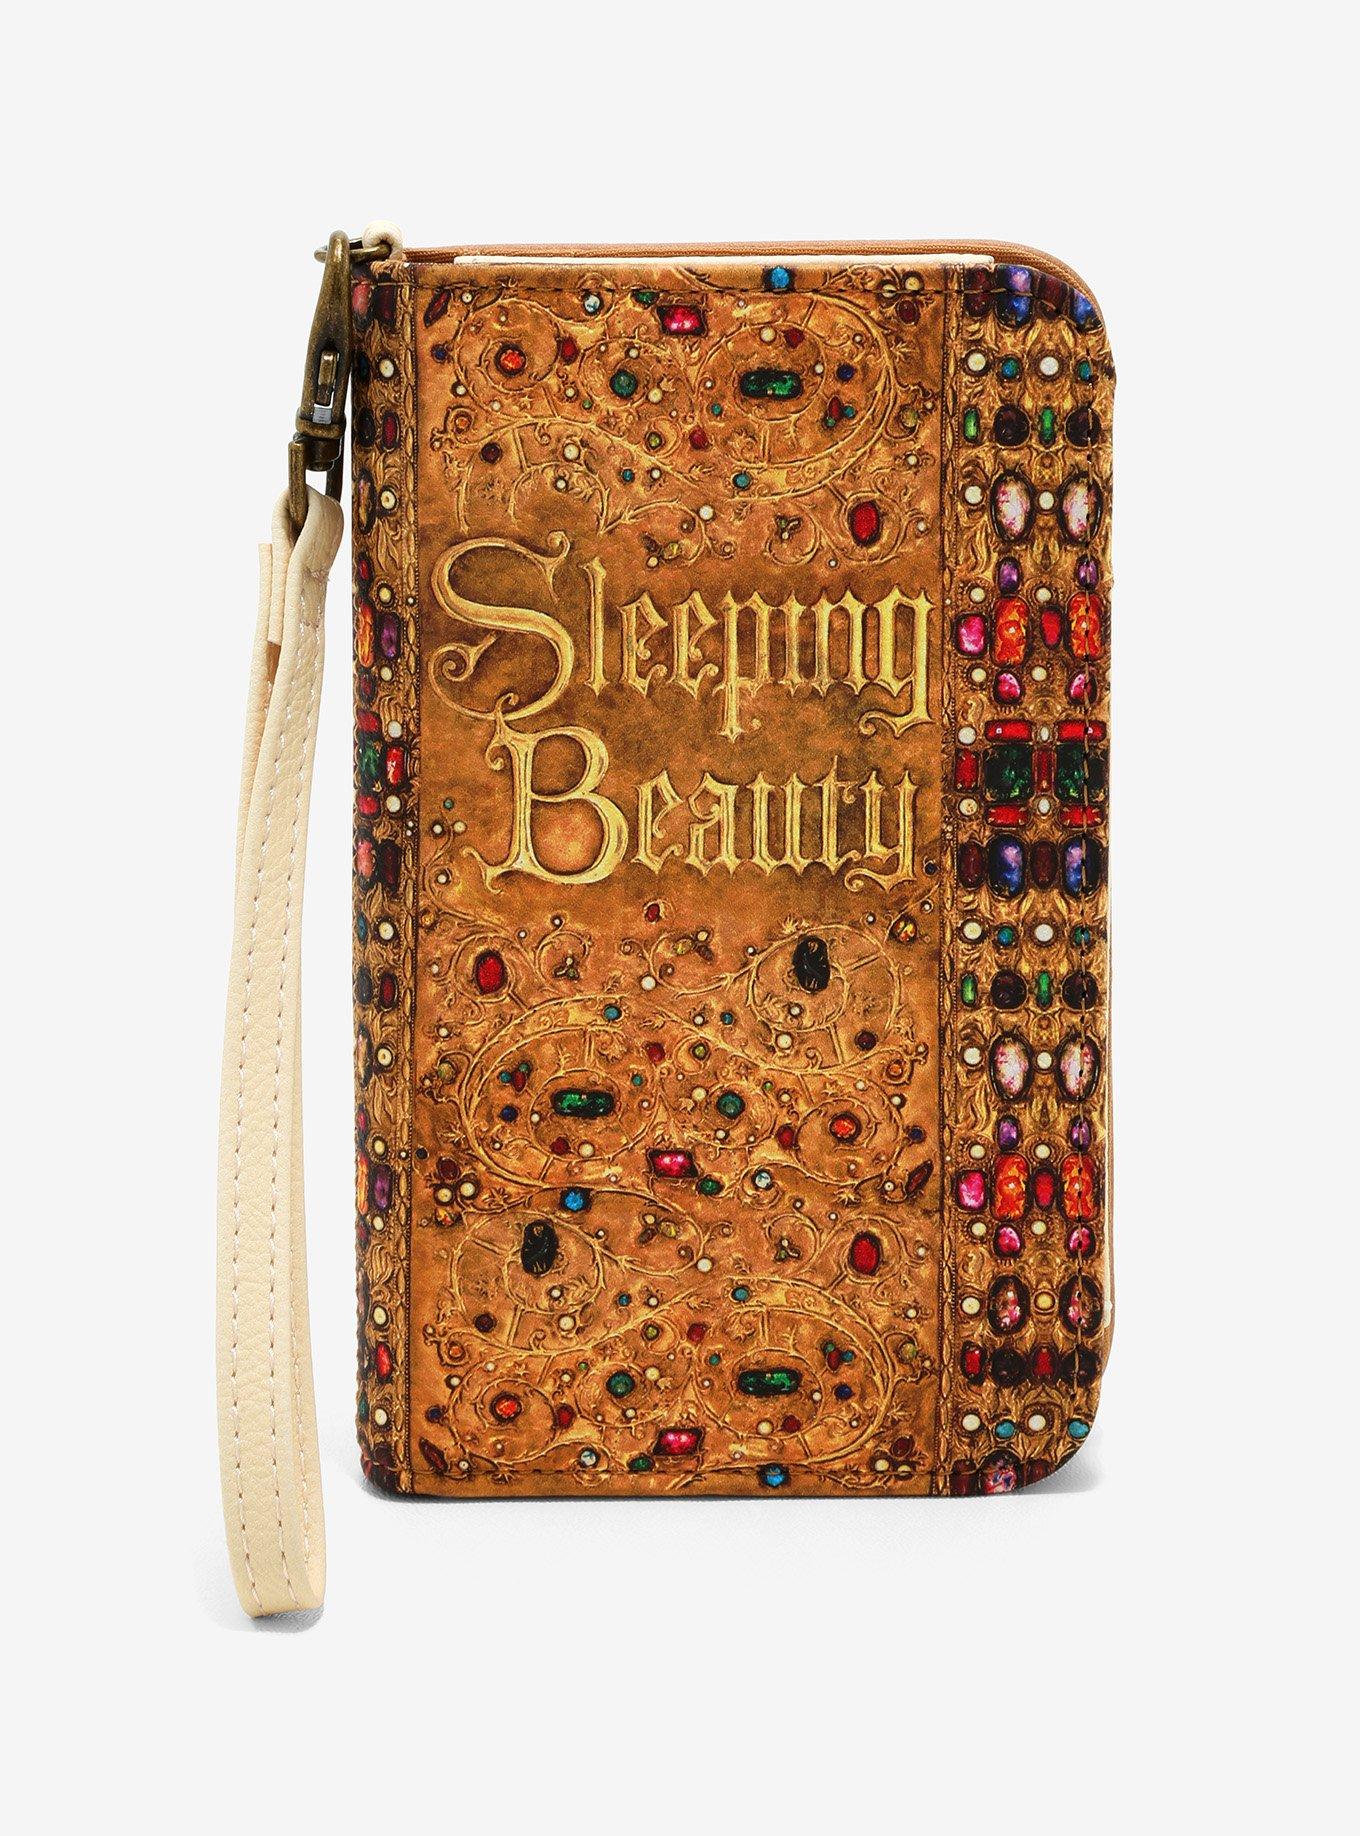 The Sleeping Beauty Book Wallet in Vinyl